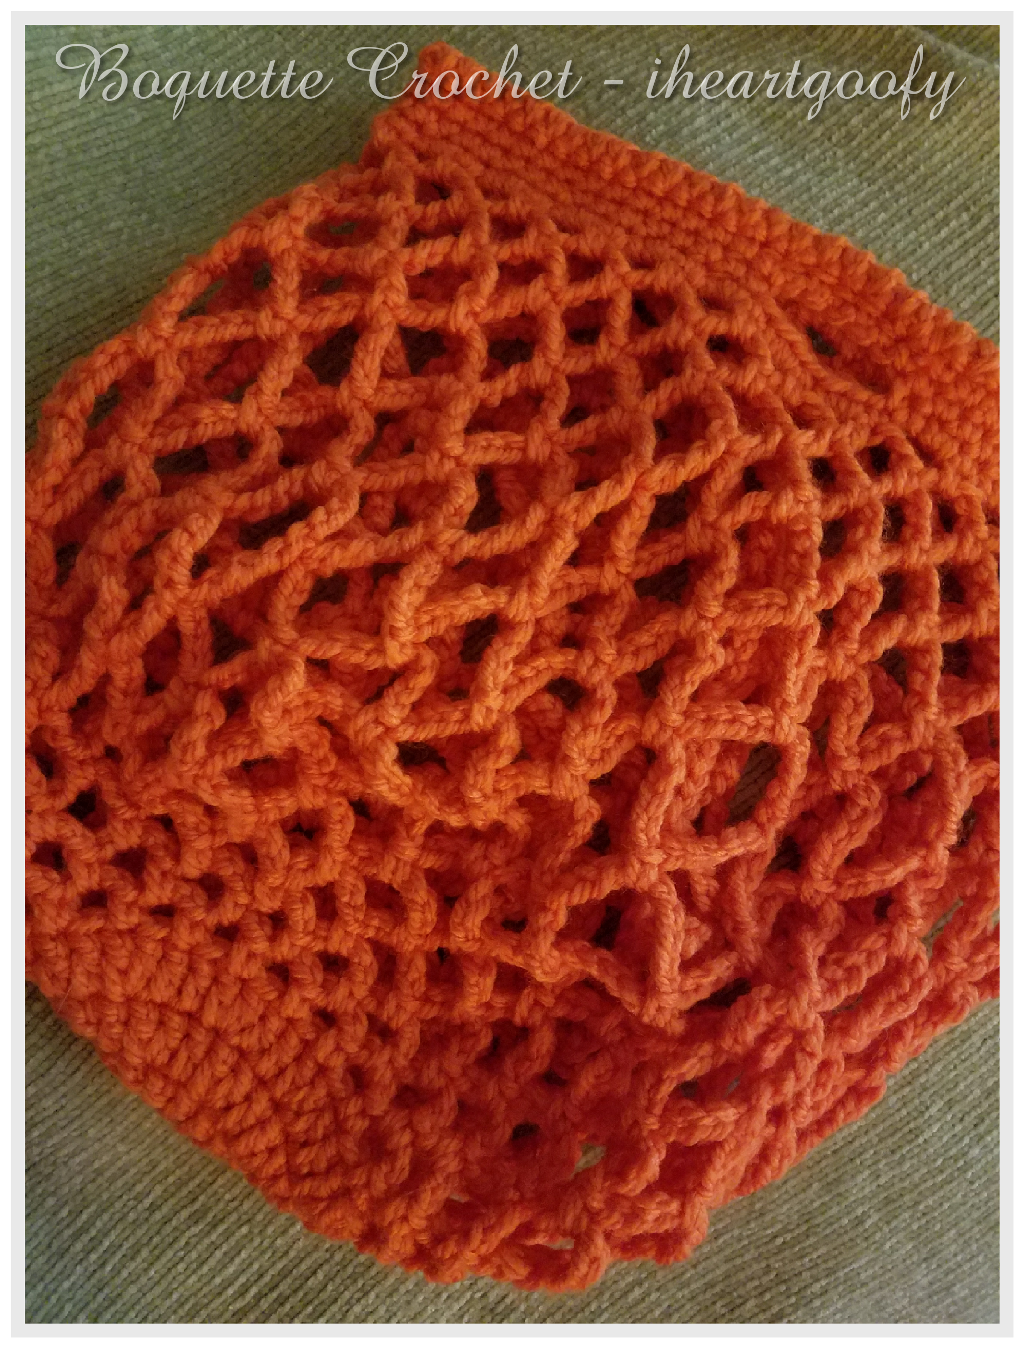 Mesh Produce Bags Free Crochet Pattern - iheartgoofy